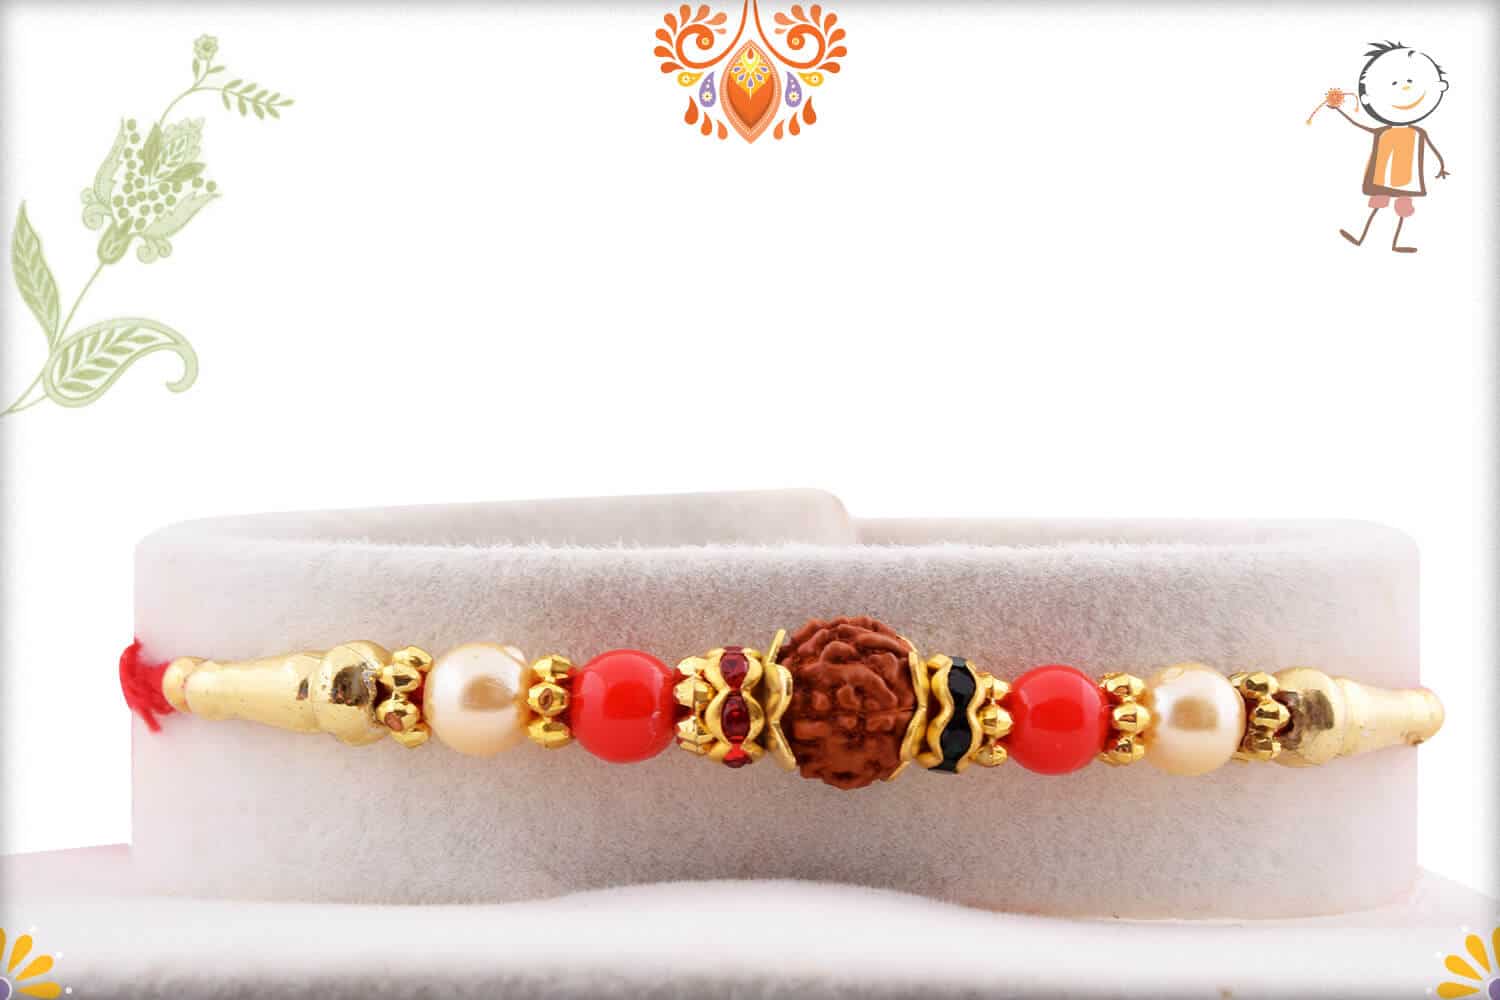 Elegant Rudraksh Rakhi with Red Beads and Pearls | Send Rakhi Gifts Online 1